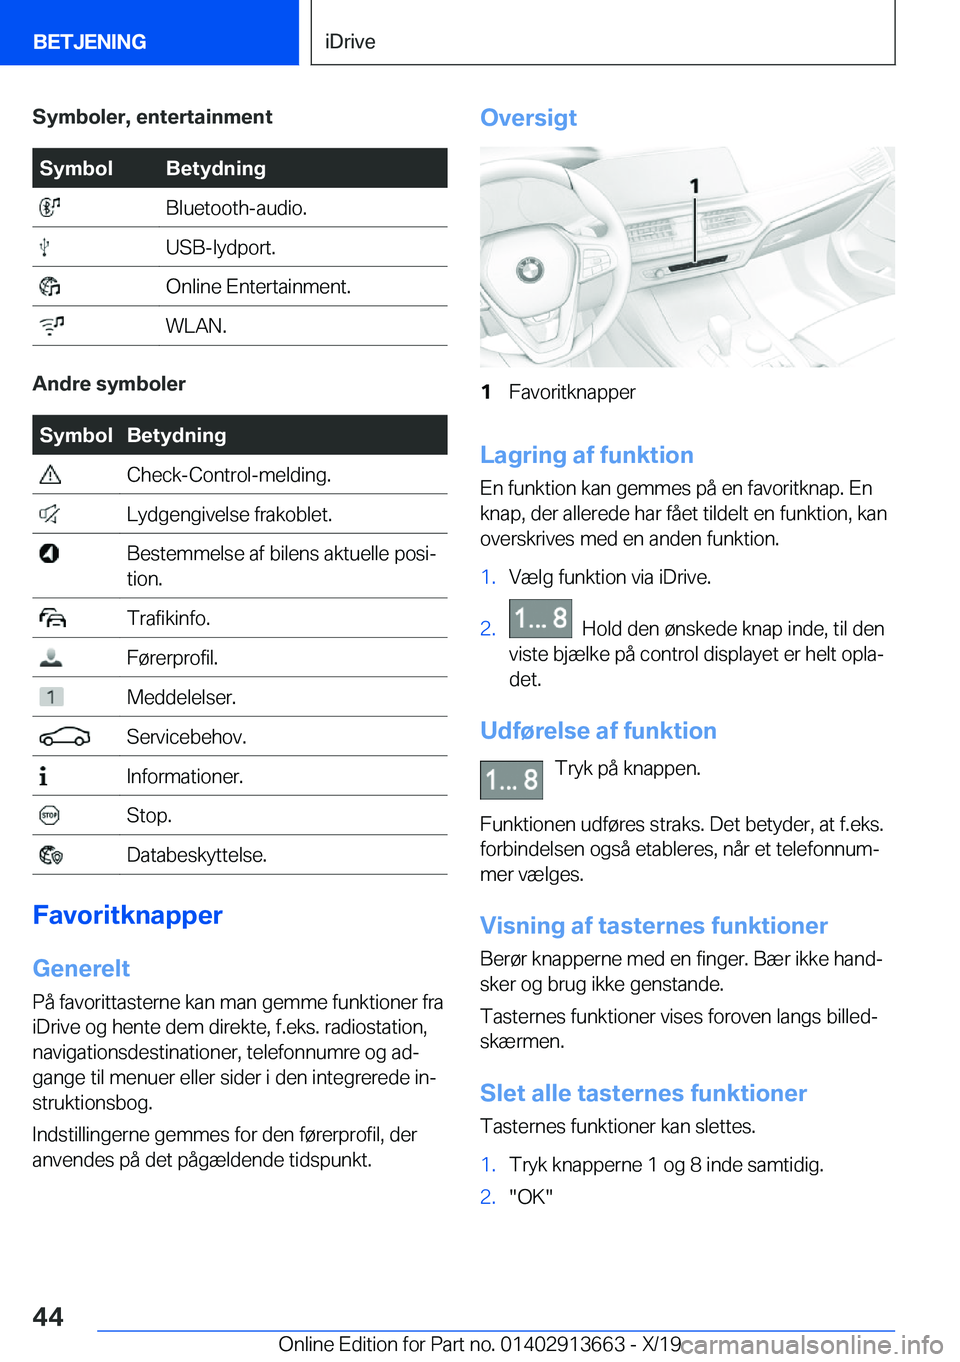 BMW X5 2020  InstruktionsbØger (in Danish) �S�y�m�b�o�l�e�r�,��e�n�t�e�r�t�a�i�n�m�e�n�t�S�y�m�b�o�l�B�e�t�y�d�n�i�n�g��B�l�u�e�t�o�o�t�h�-�a�u�d�i�o�.��U�S�B�-�l�y�d�p�o�r�t�.��O�n�l�i�n�e��E�n�t�e�r�t�a�i�n�m�e�n�t�.��W�L�A�N�.
�A�n�d�